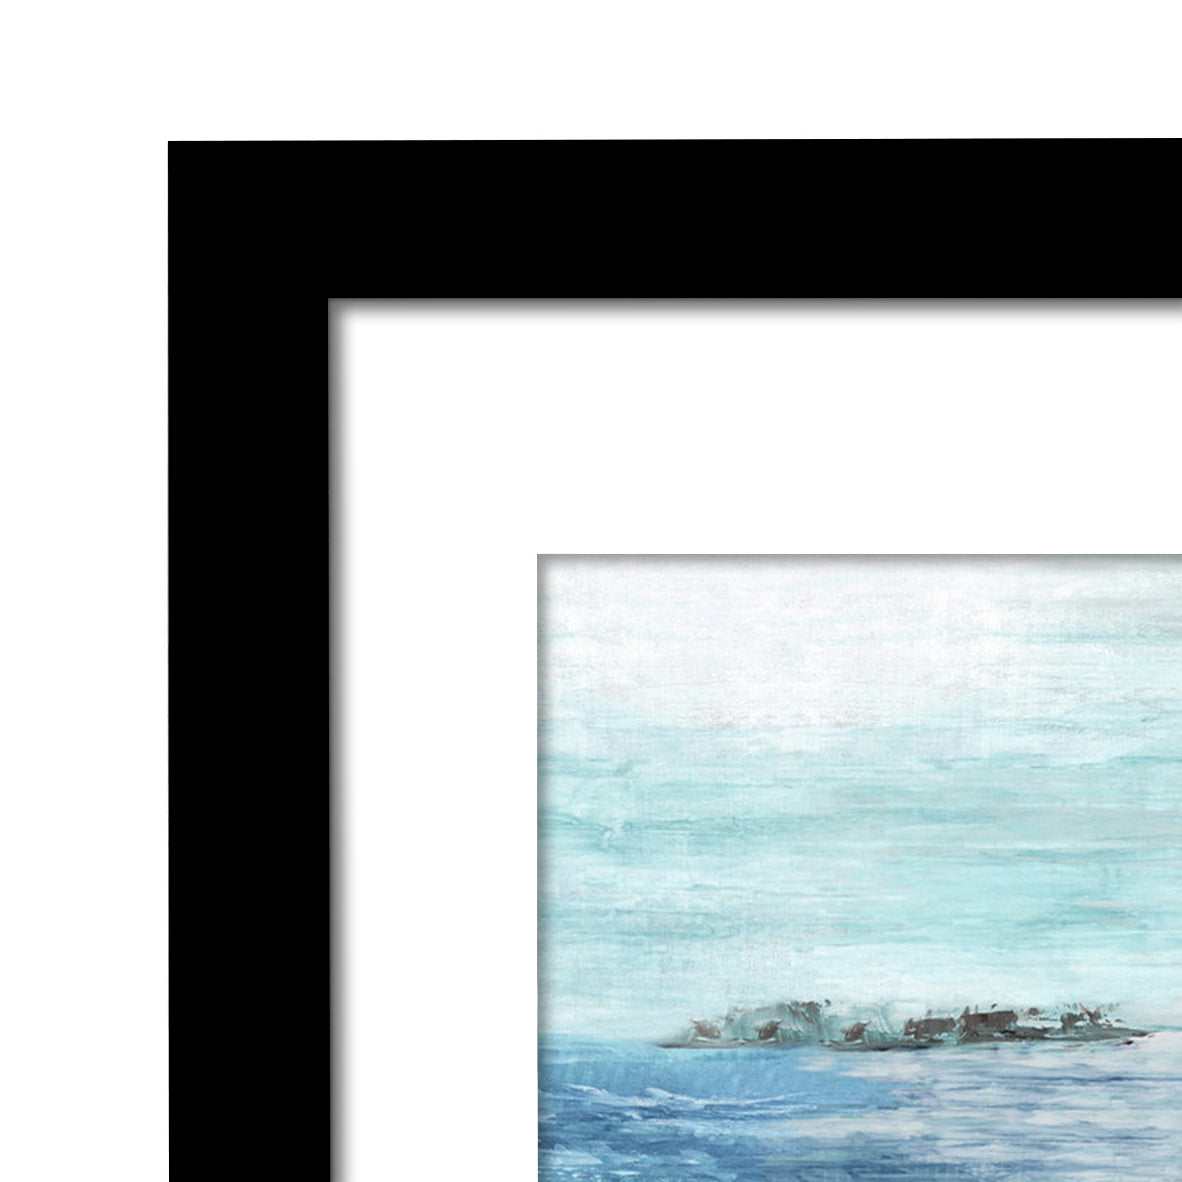 Coastal Breeze by PI Creative - 7 Piece Framed Gallery Wall Art Set - Americanflat